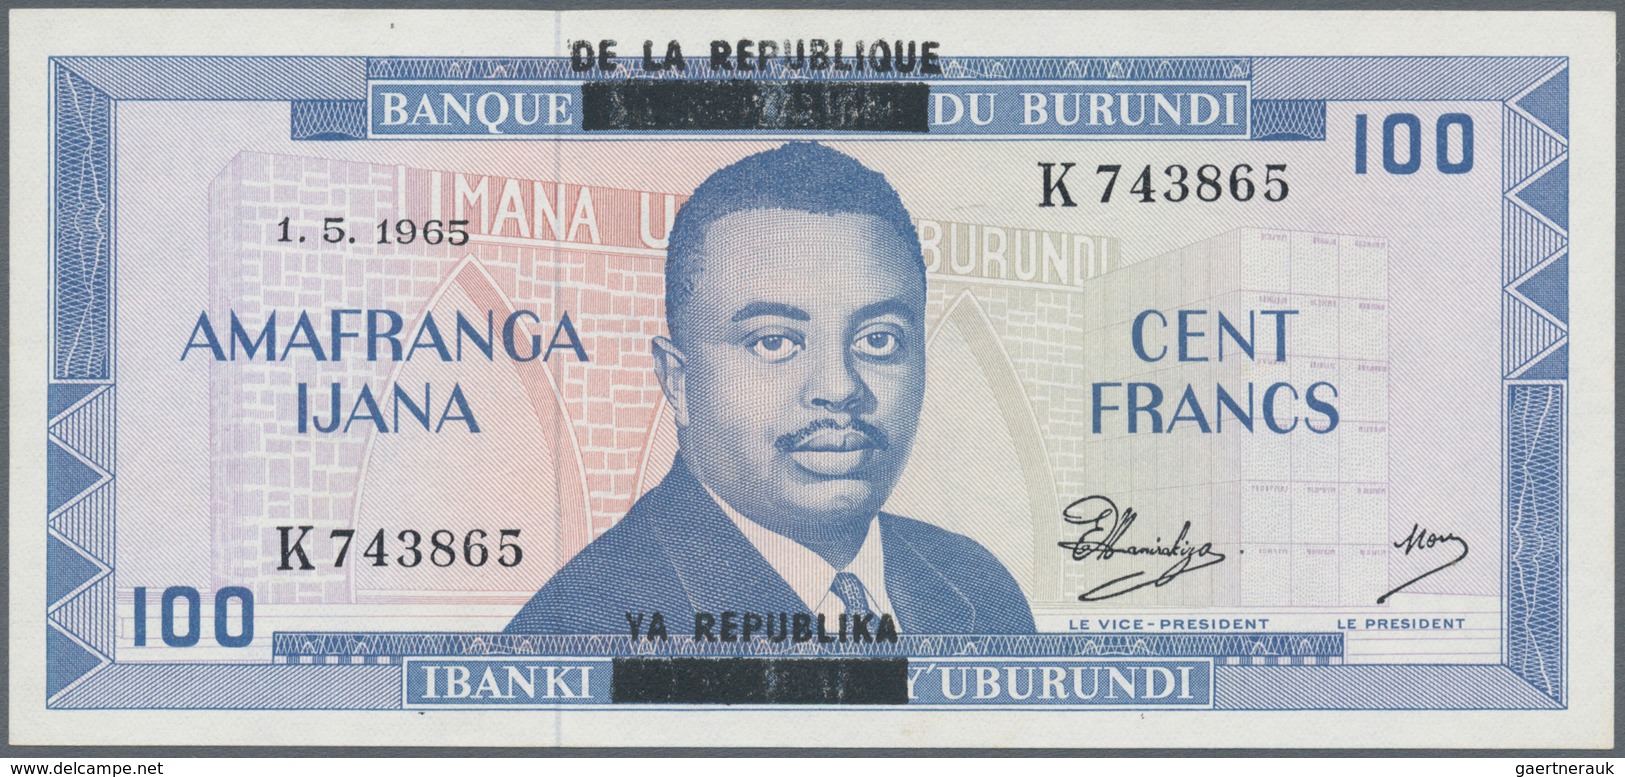 Burundi: 100 Francs 01.05.1965 P. 17, With Black Overprint "De La Republique", S/N #K743865, In Exce - Burundi